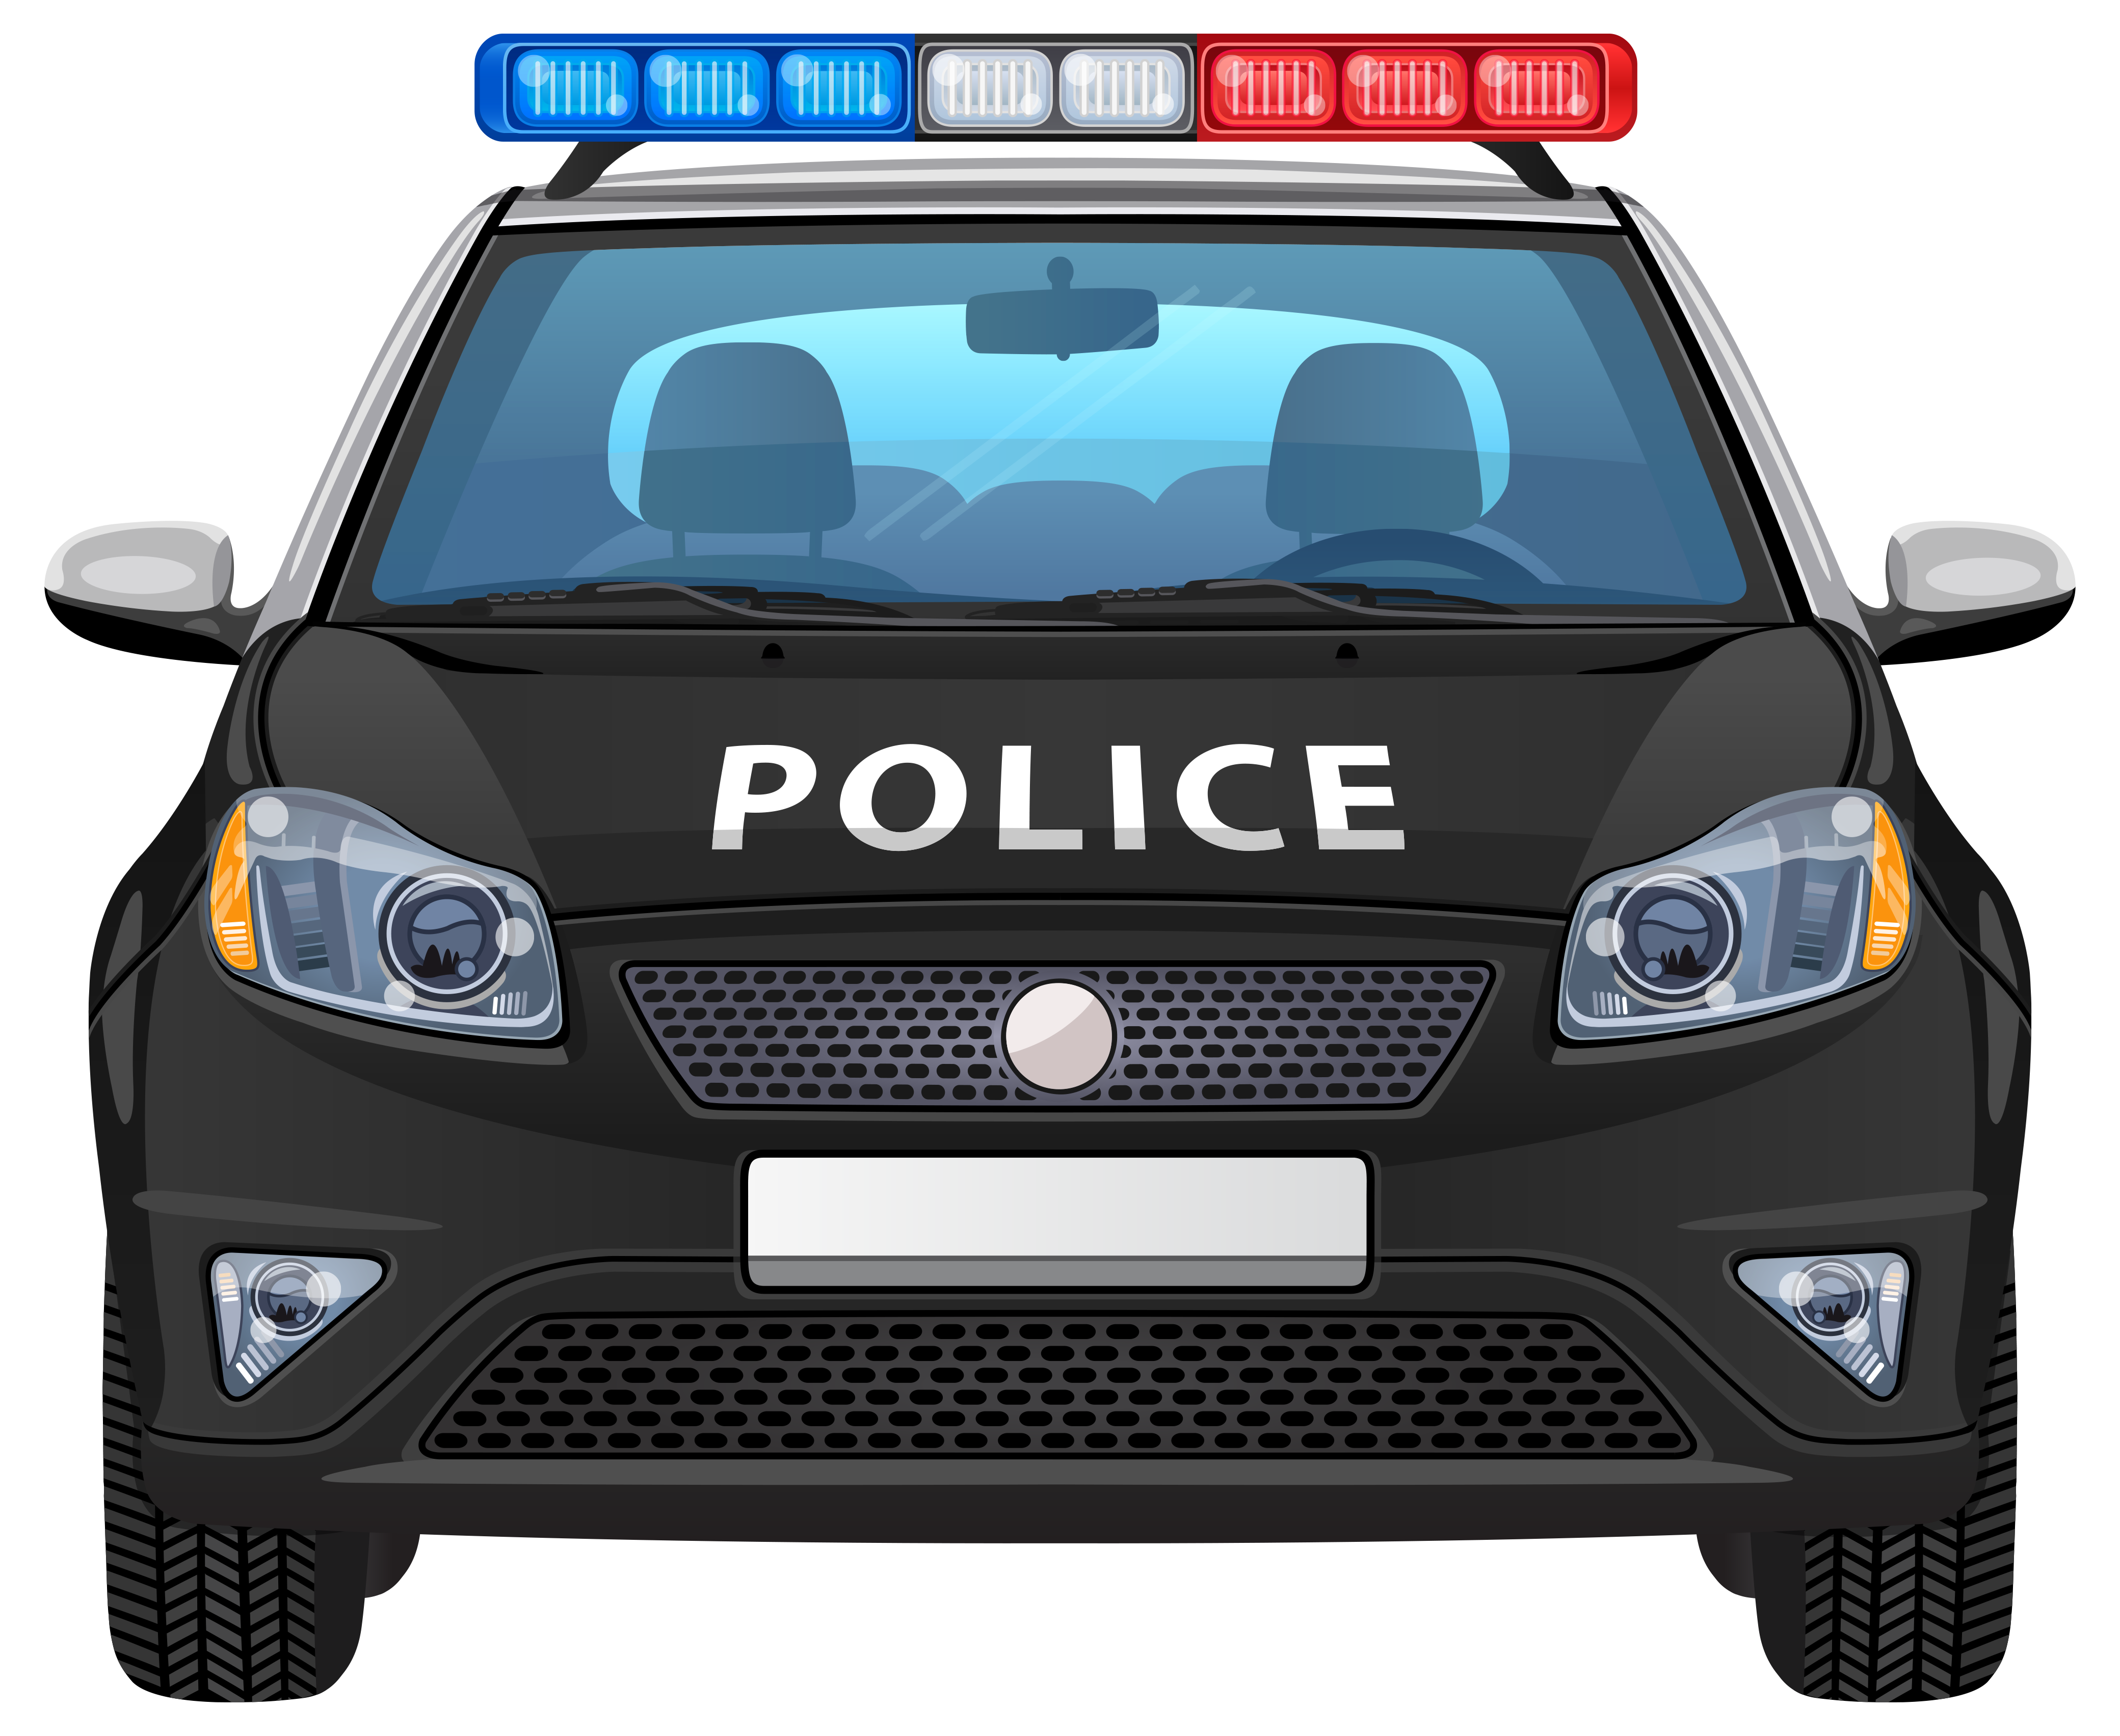 Police car clip art image 2